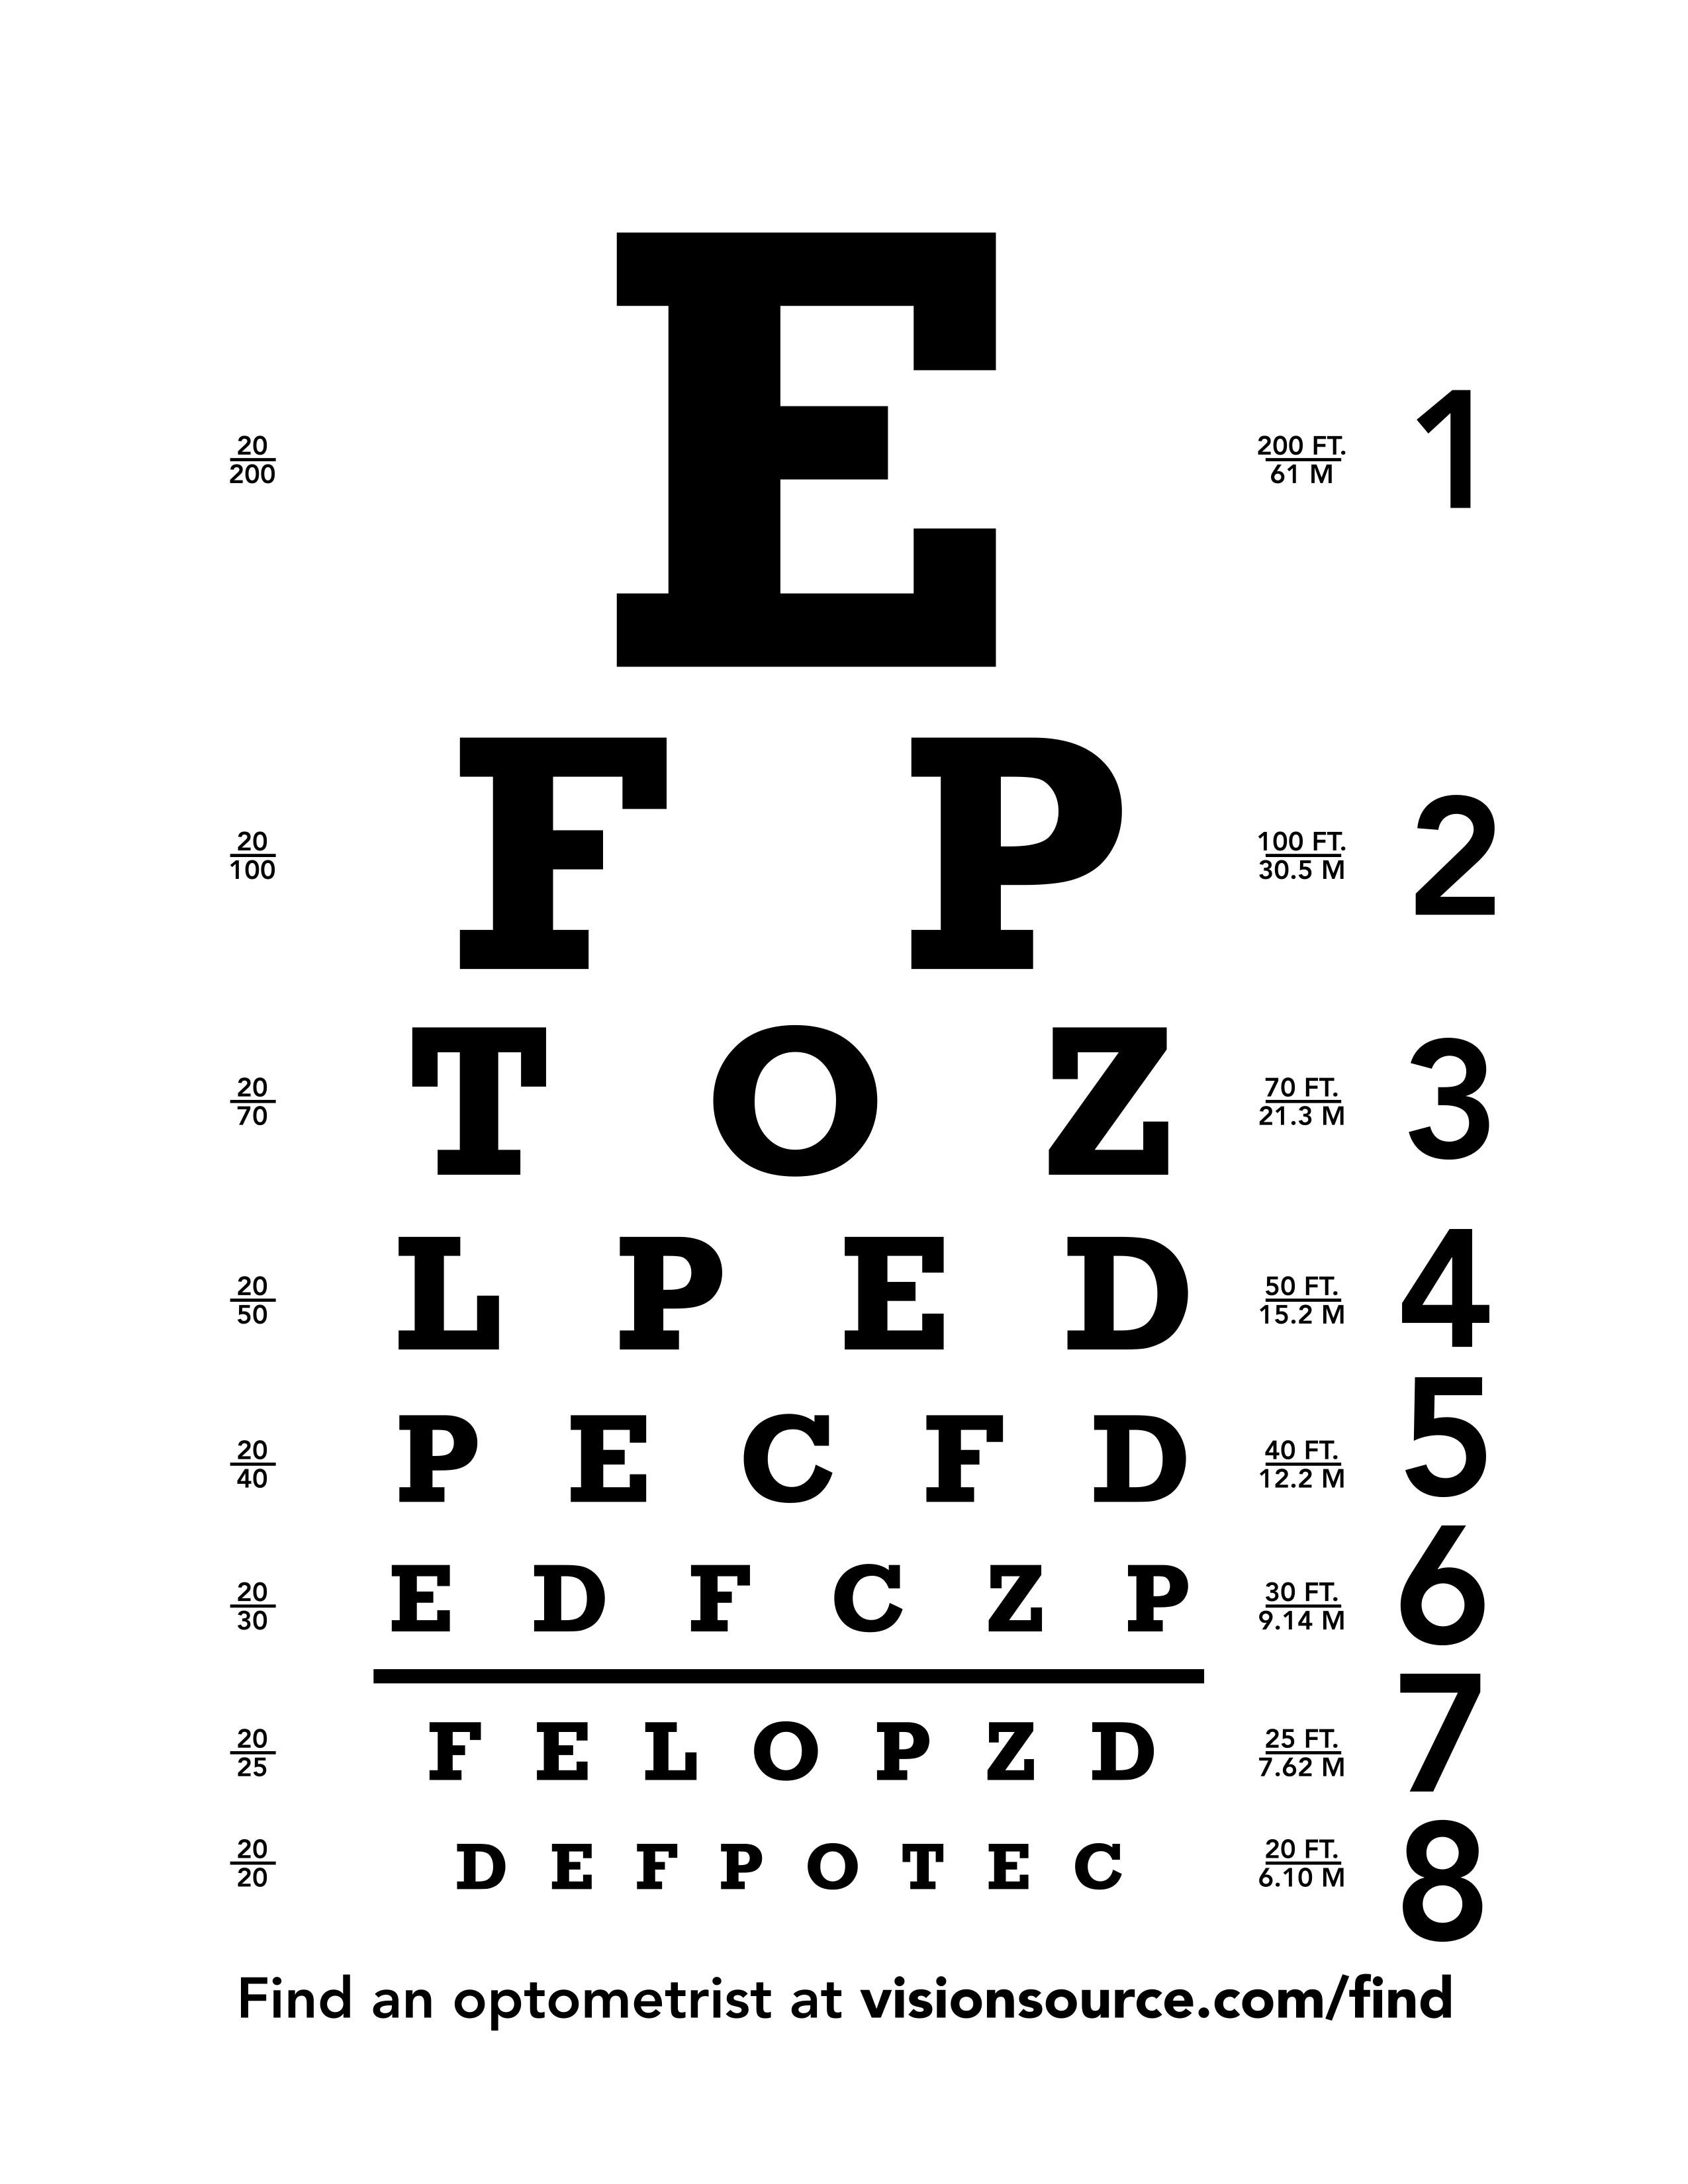 eye-chart-snellen-eye-chart-wall-chart-eye-charts-for-eye-exams